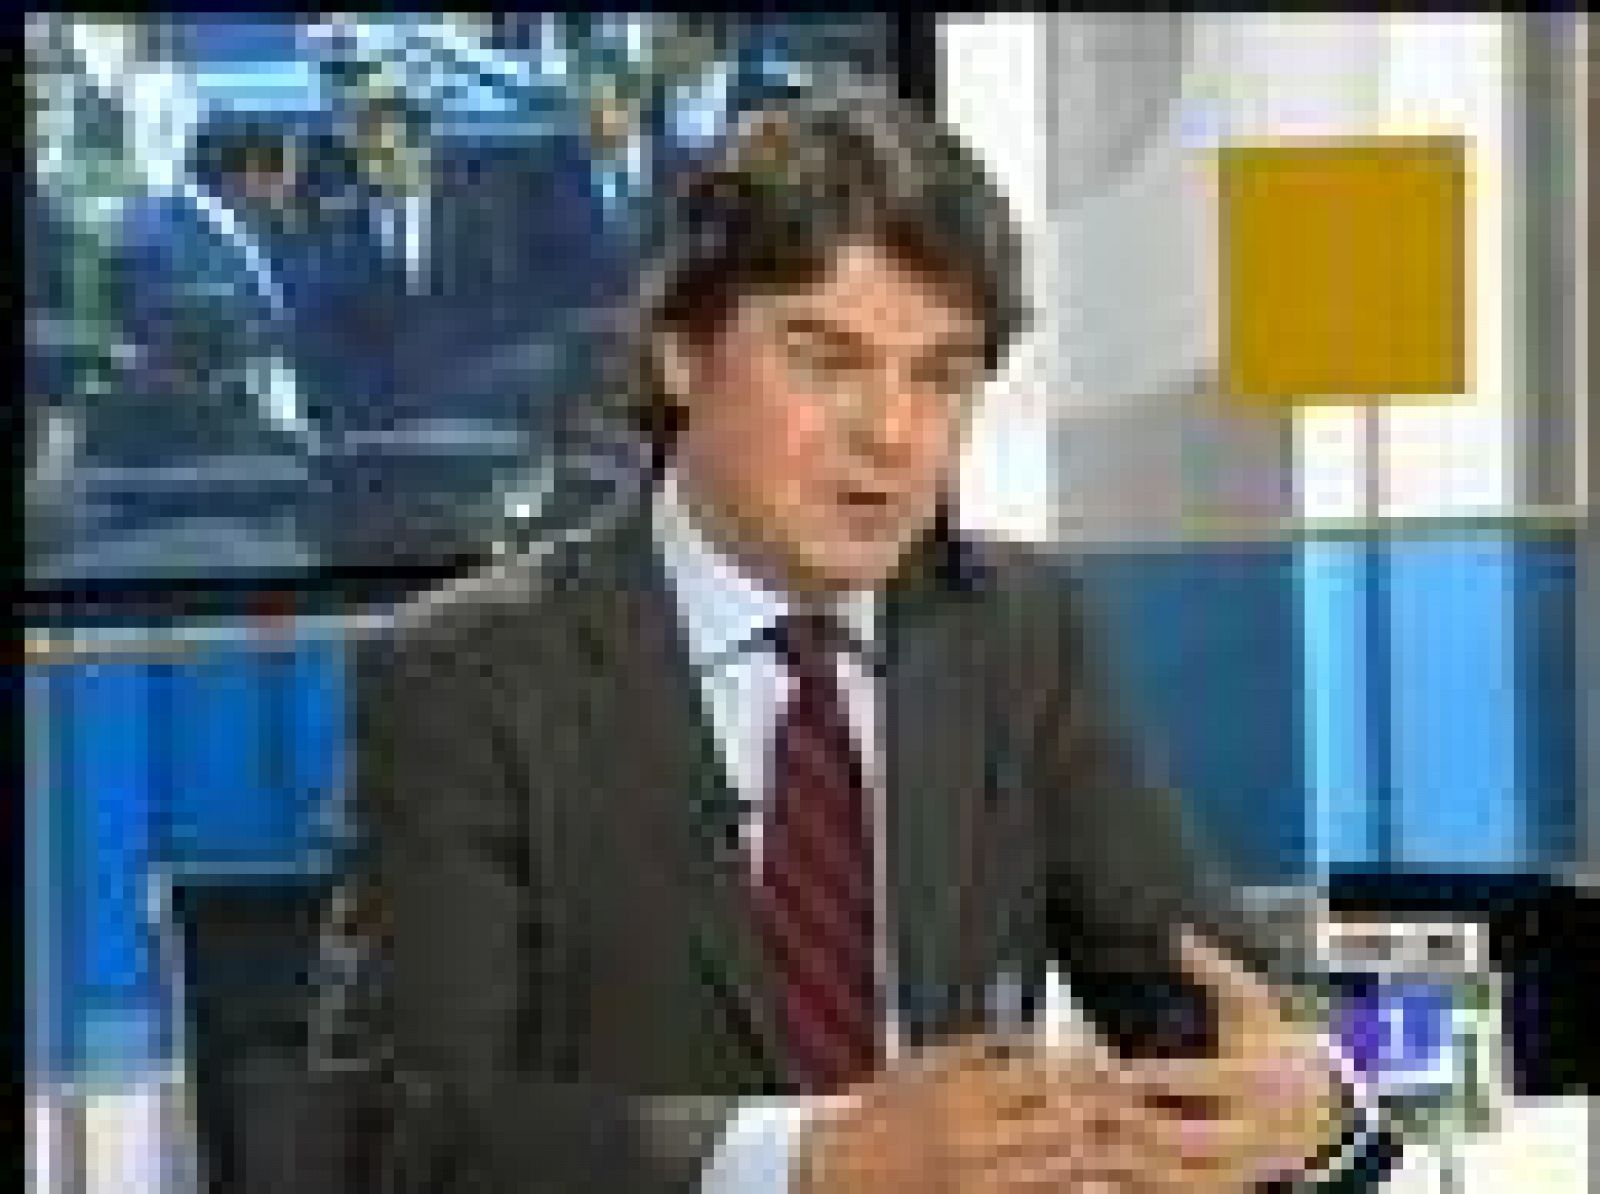 Entrevista íntegra a Jorge Moragas en TVE